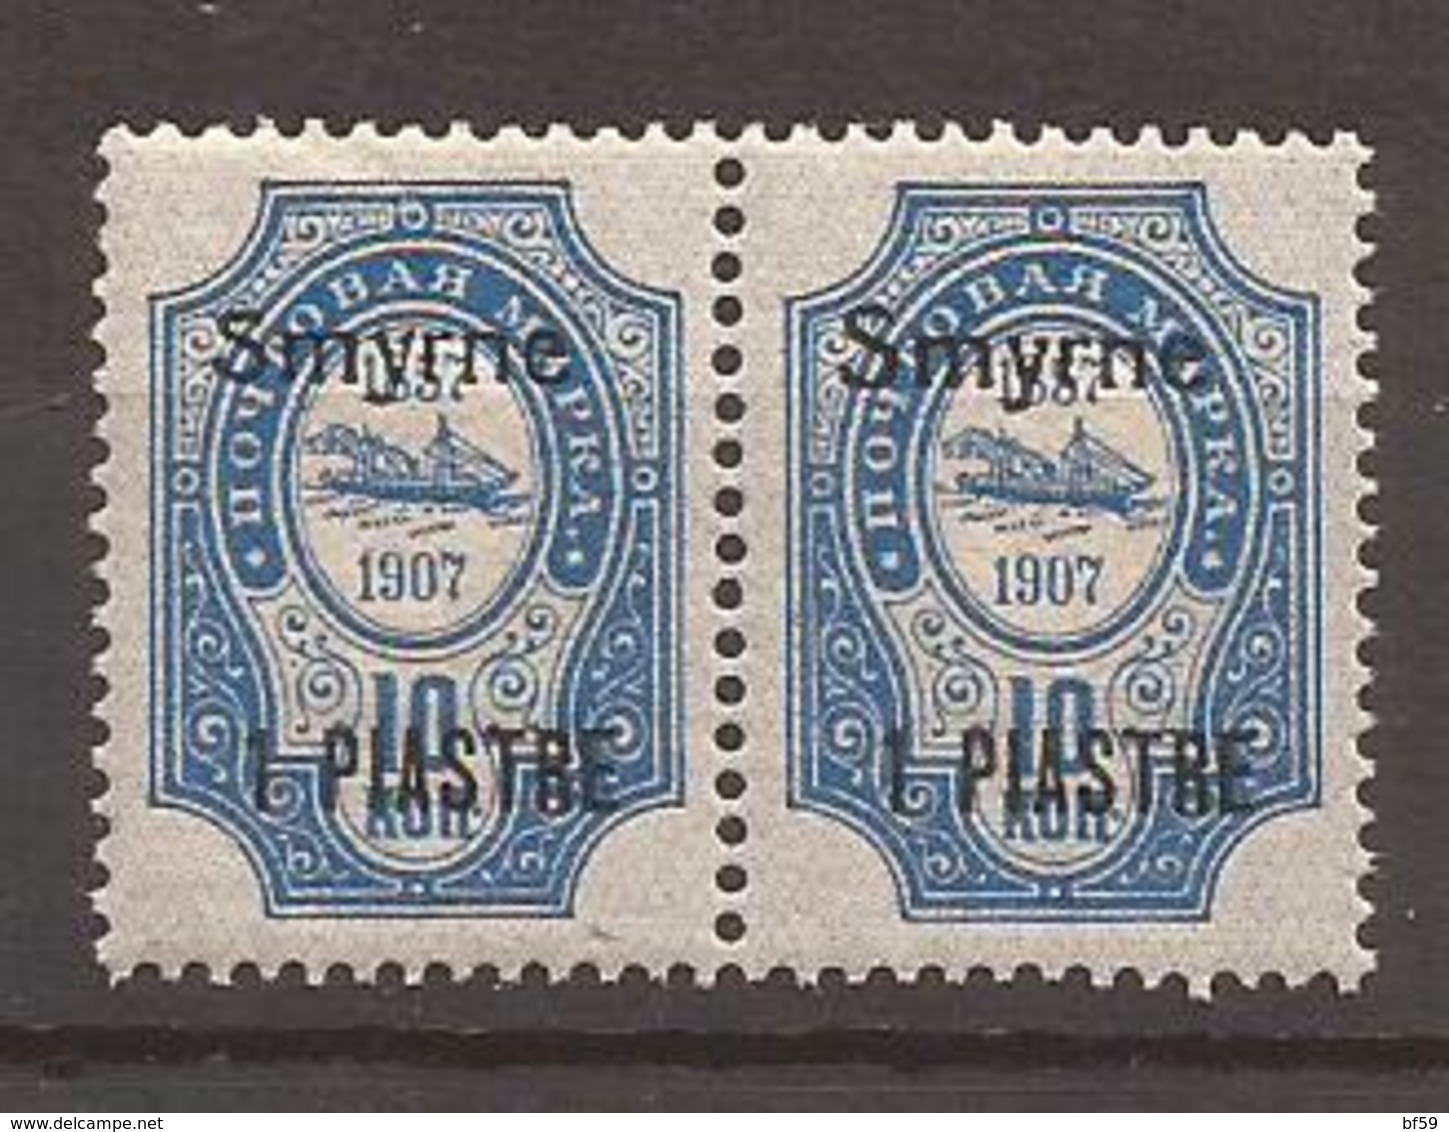 RUSSIE - LEVANT - SMYRNE - 1910 - N° 145 Paire - NEUF XX MNH - Levant